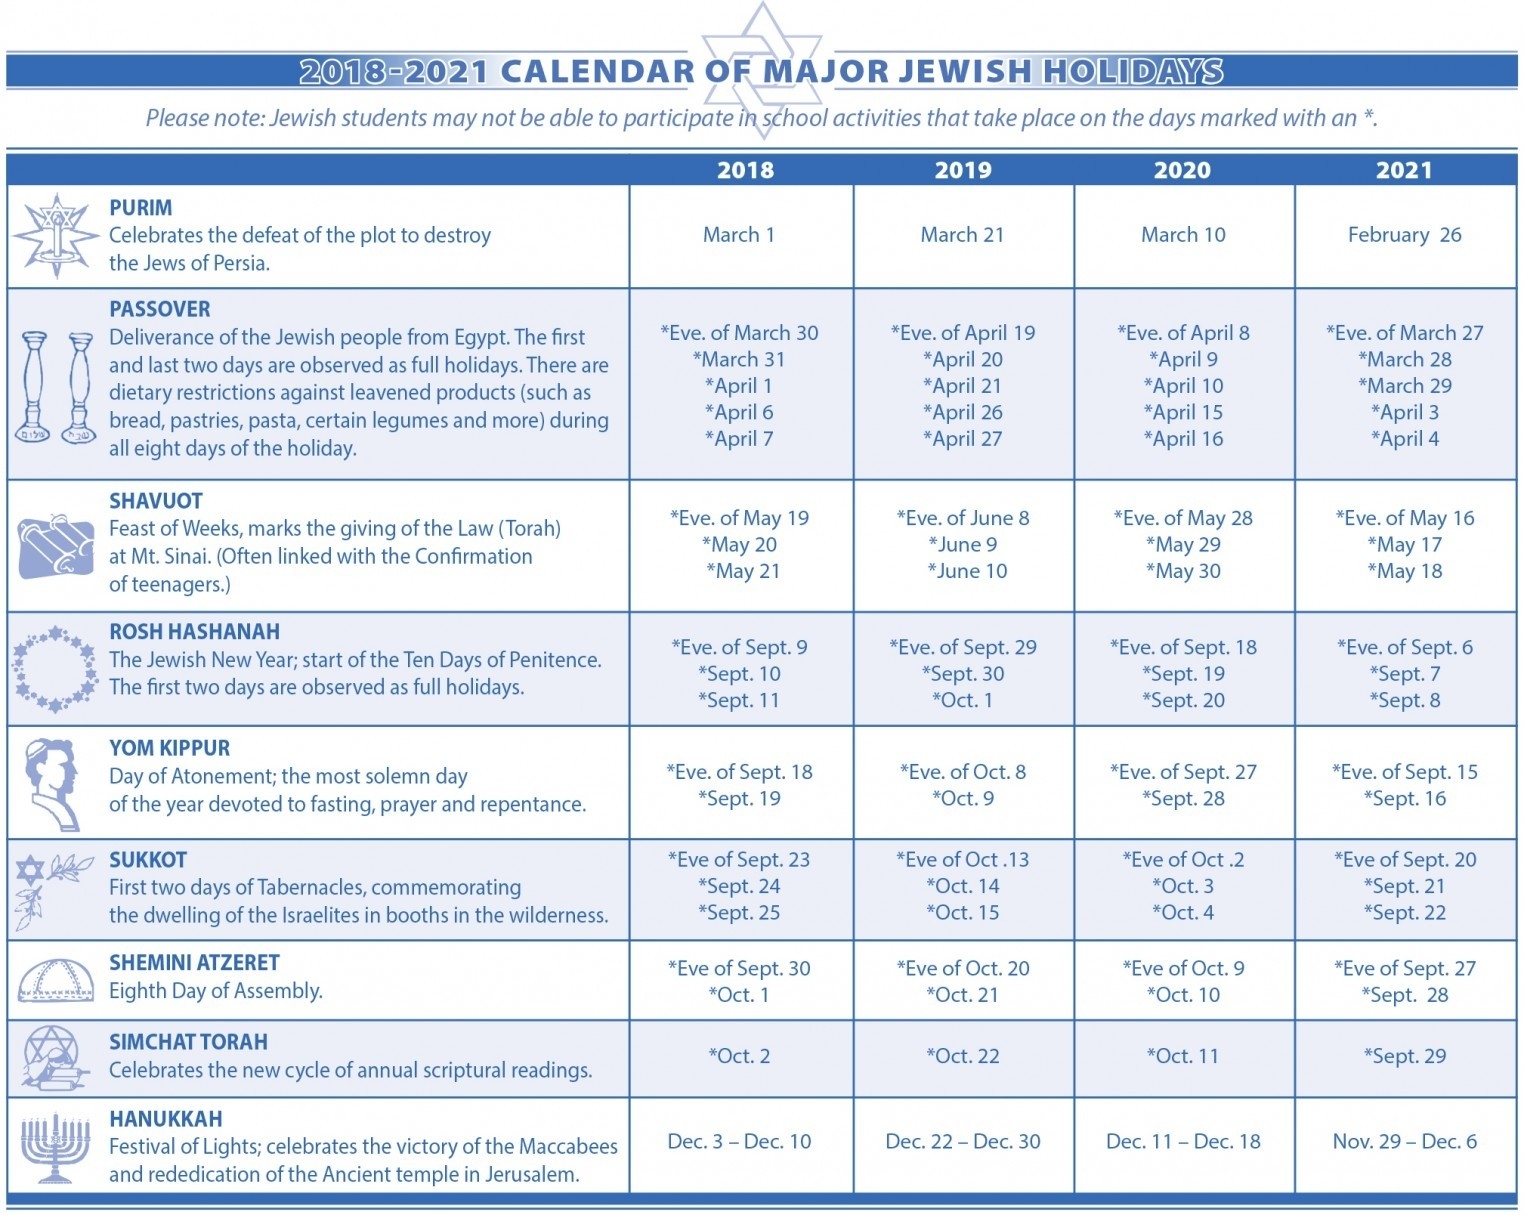 2018 Jewish Holidays Calendar | Jazz Gear-Jewish Holidays 2020 Outlook Calendar